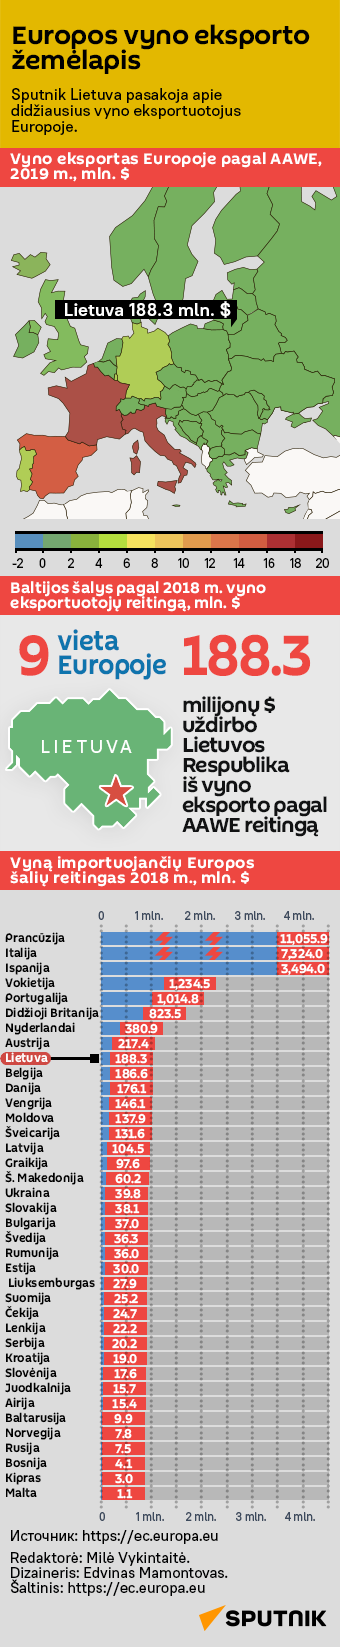 Europos vyno eksporto žemėlapis - Sputnik Lietuva